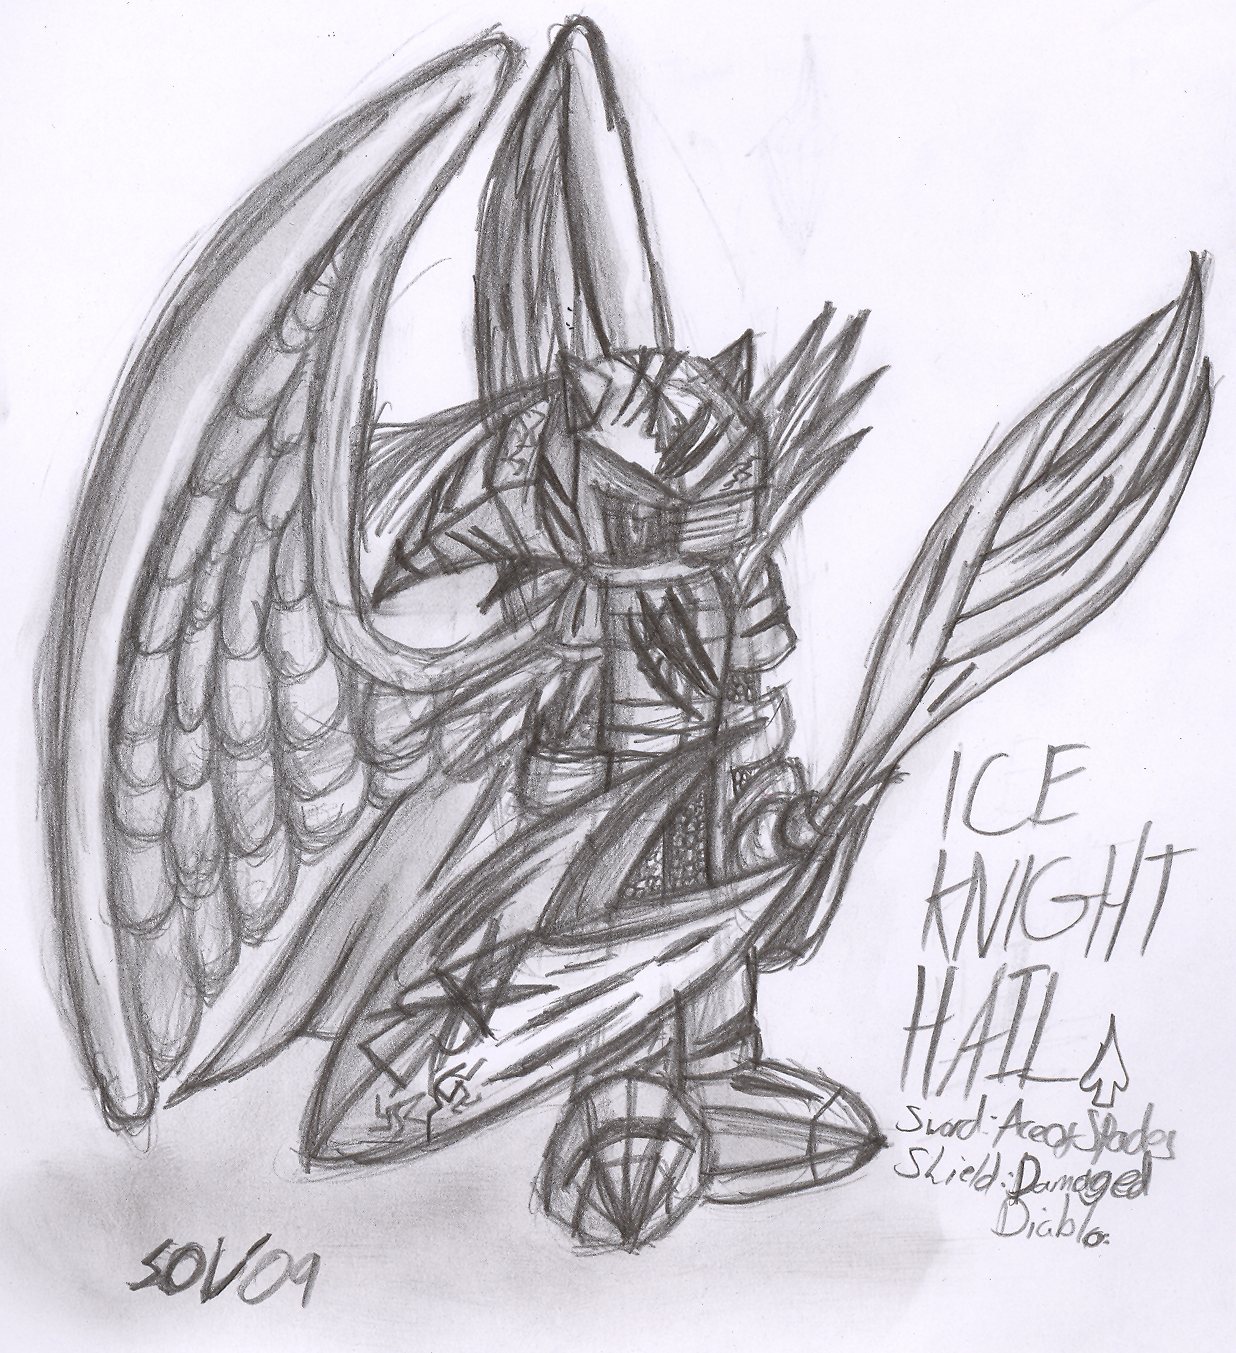 Ice Knight Hail. by shadowsofvoltage